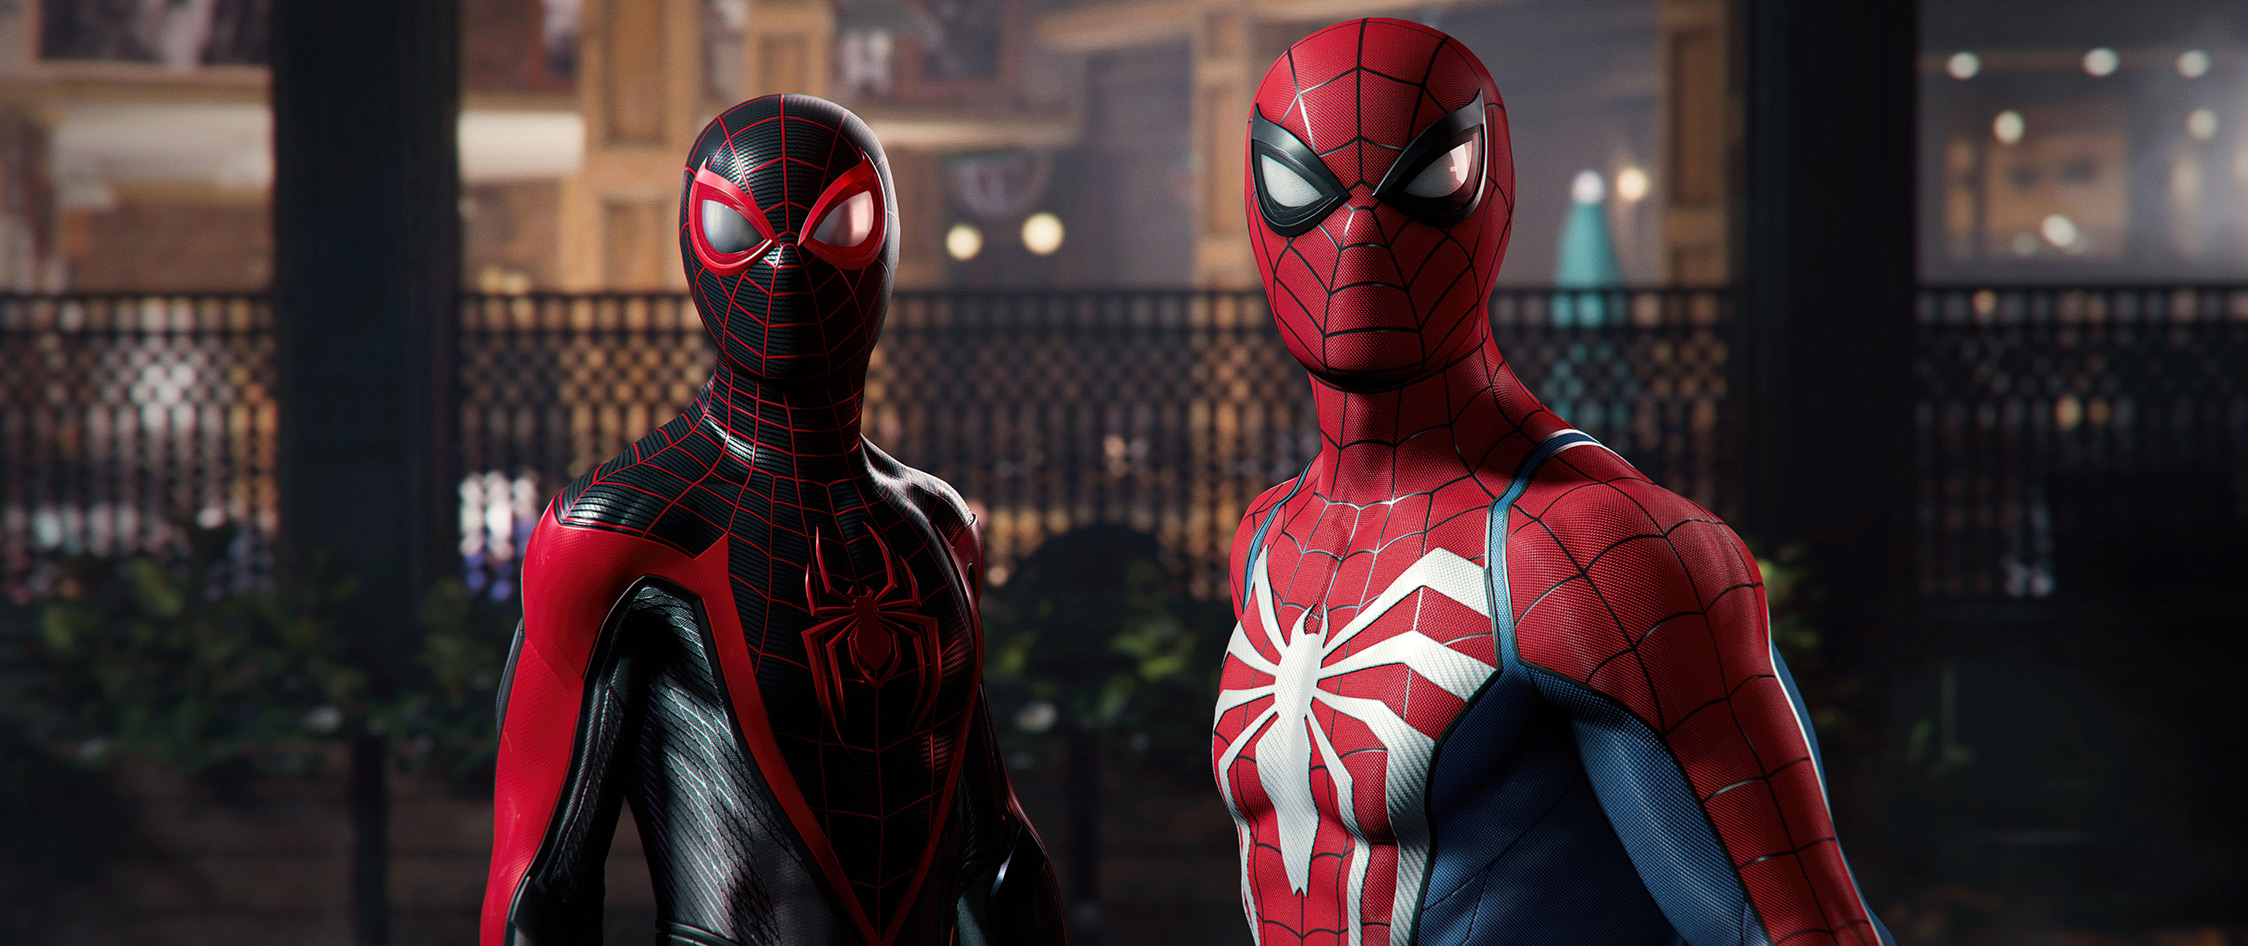 STACK spins a yarn with Marvel's Spider-Man 2 senior creative